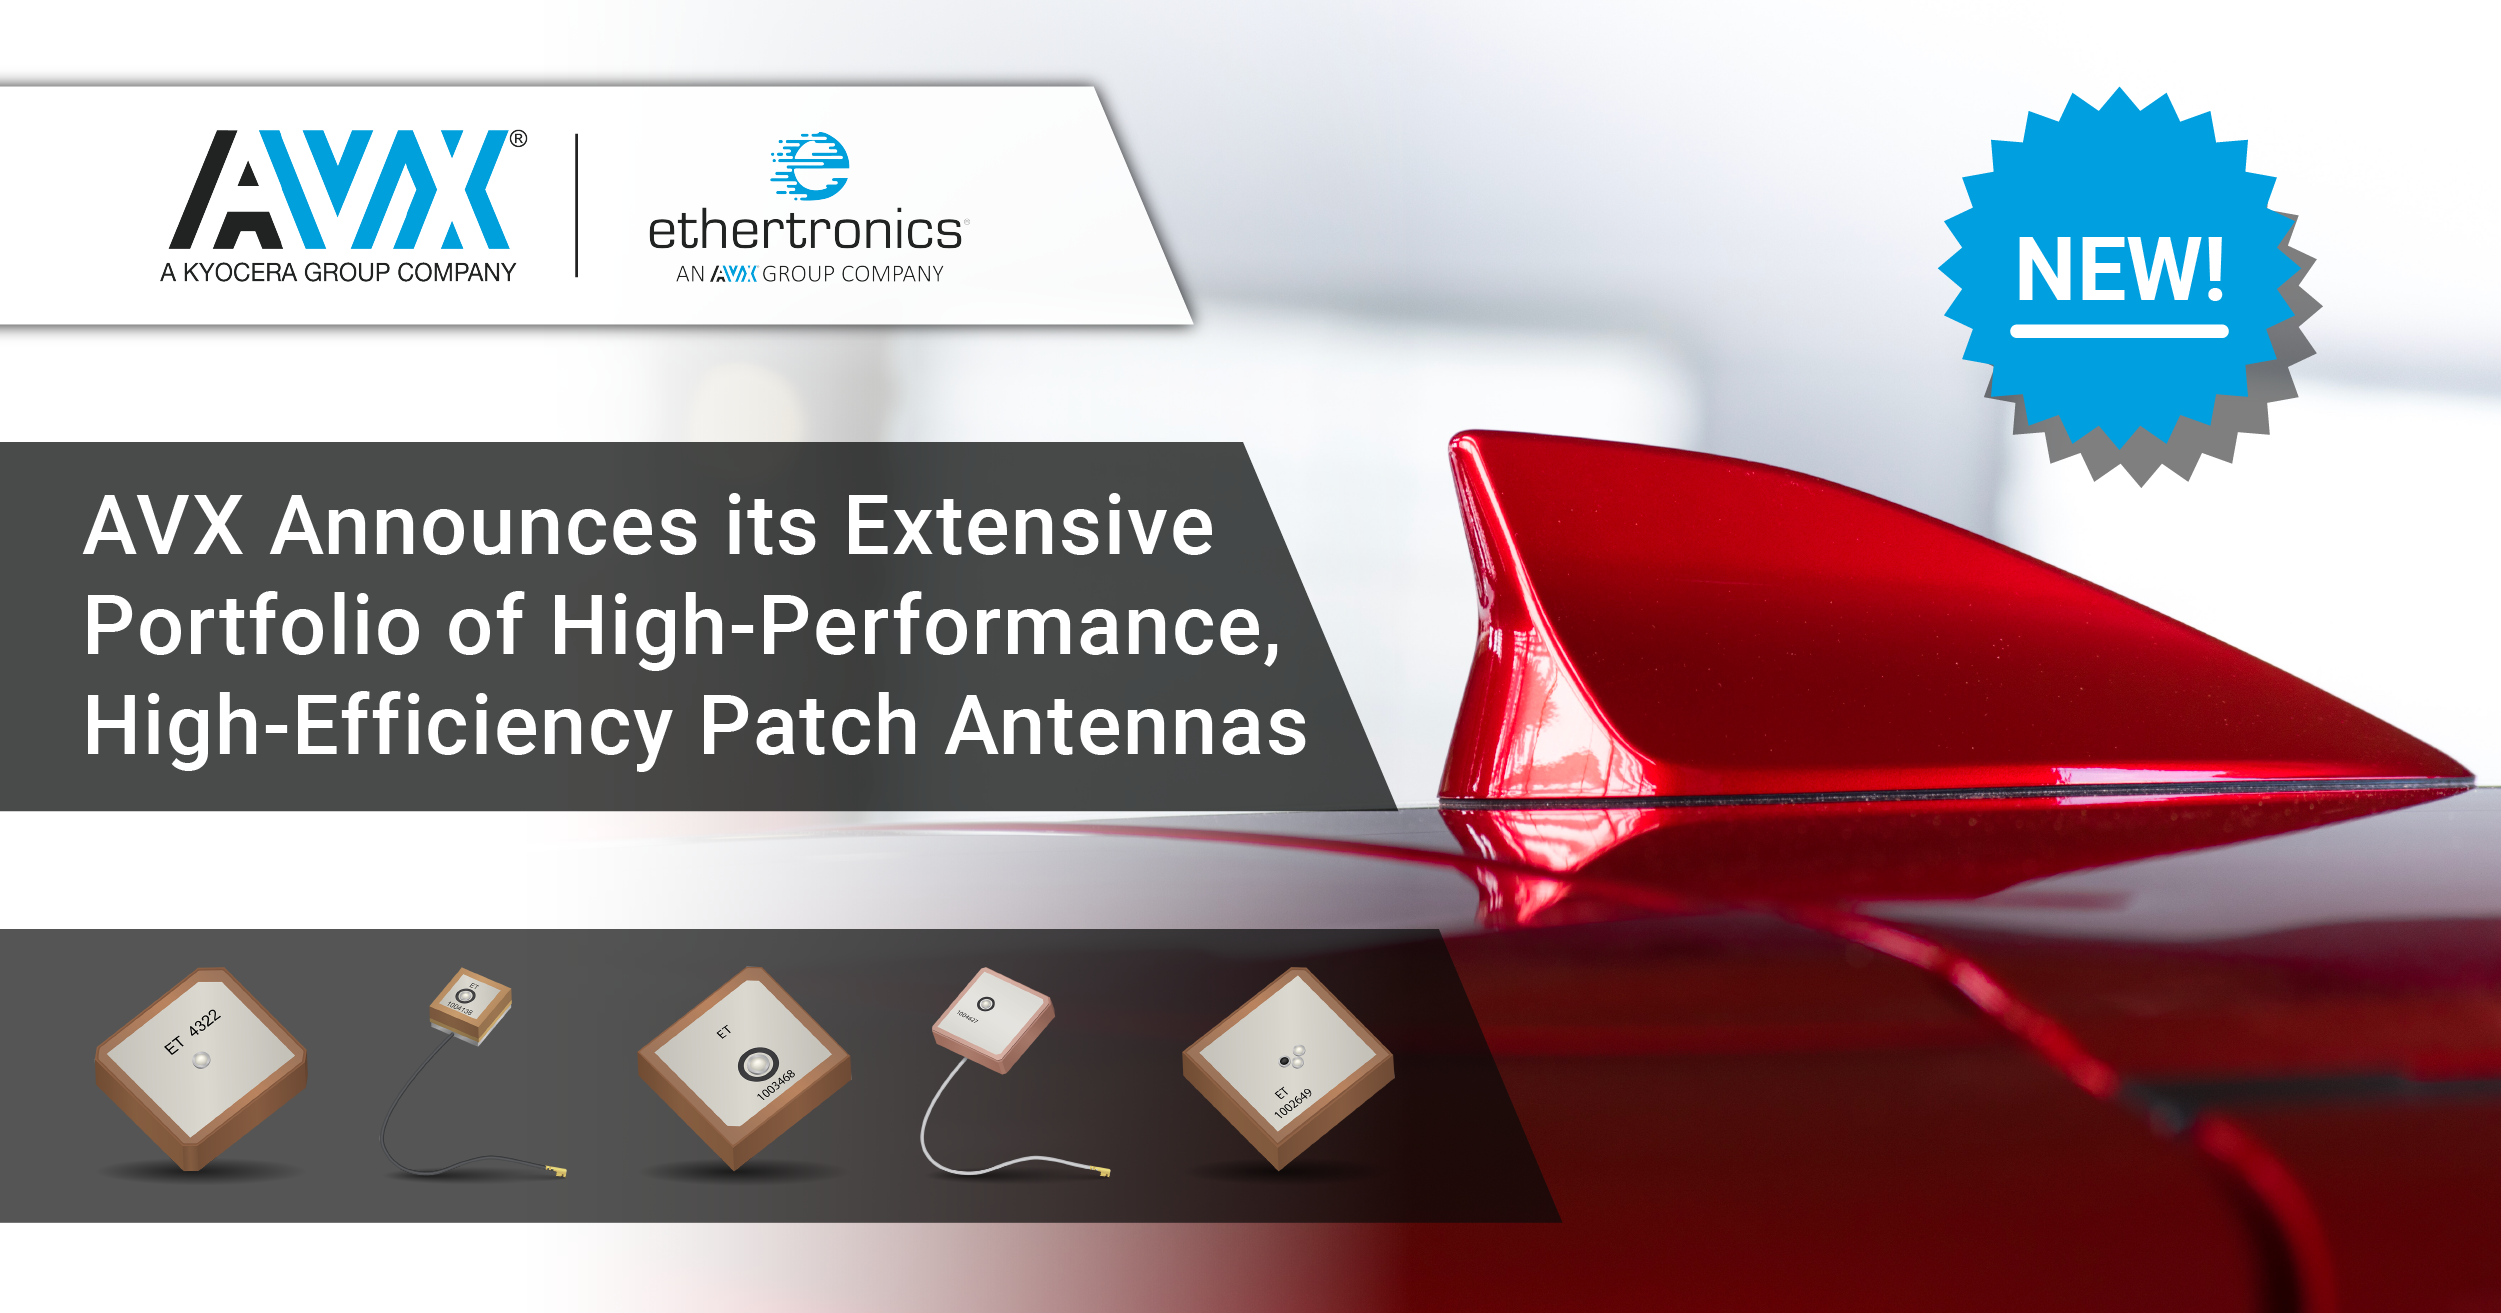 AVX/Ethertronics' High-Efficiency Patch Antenna Portfolio